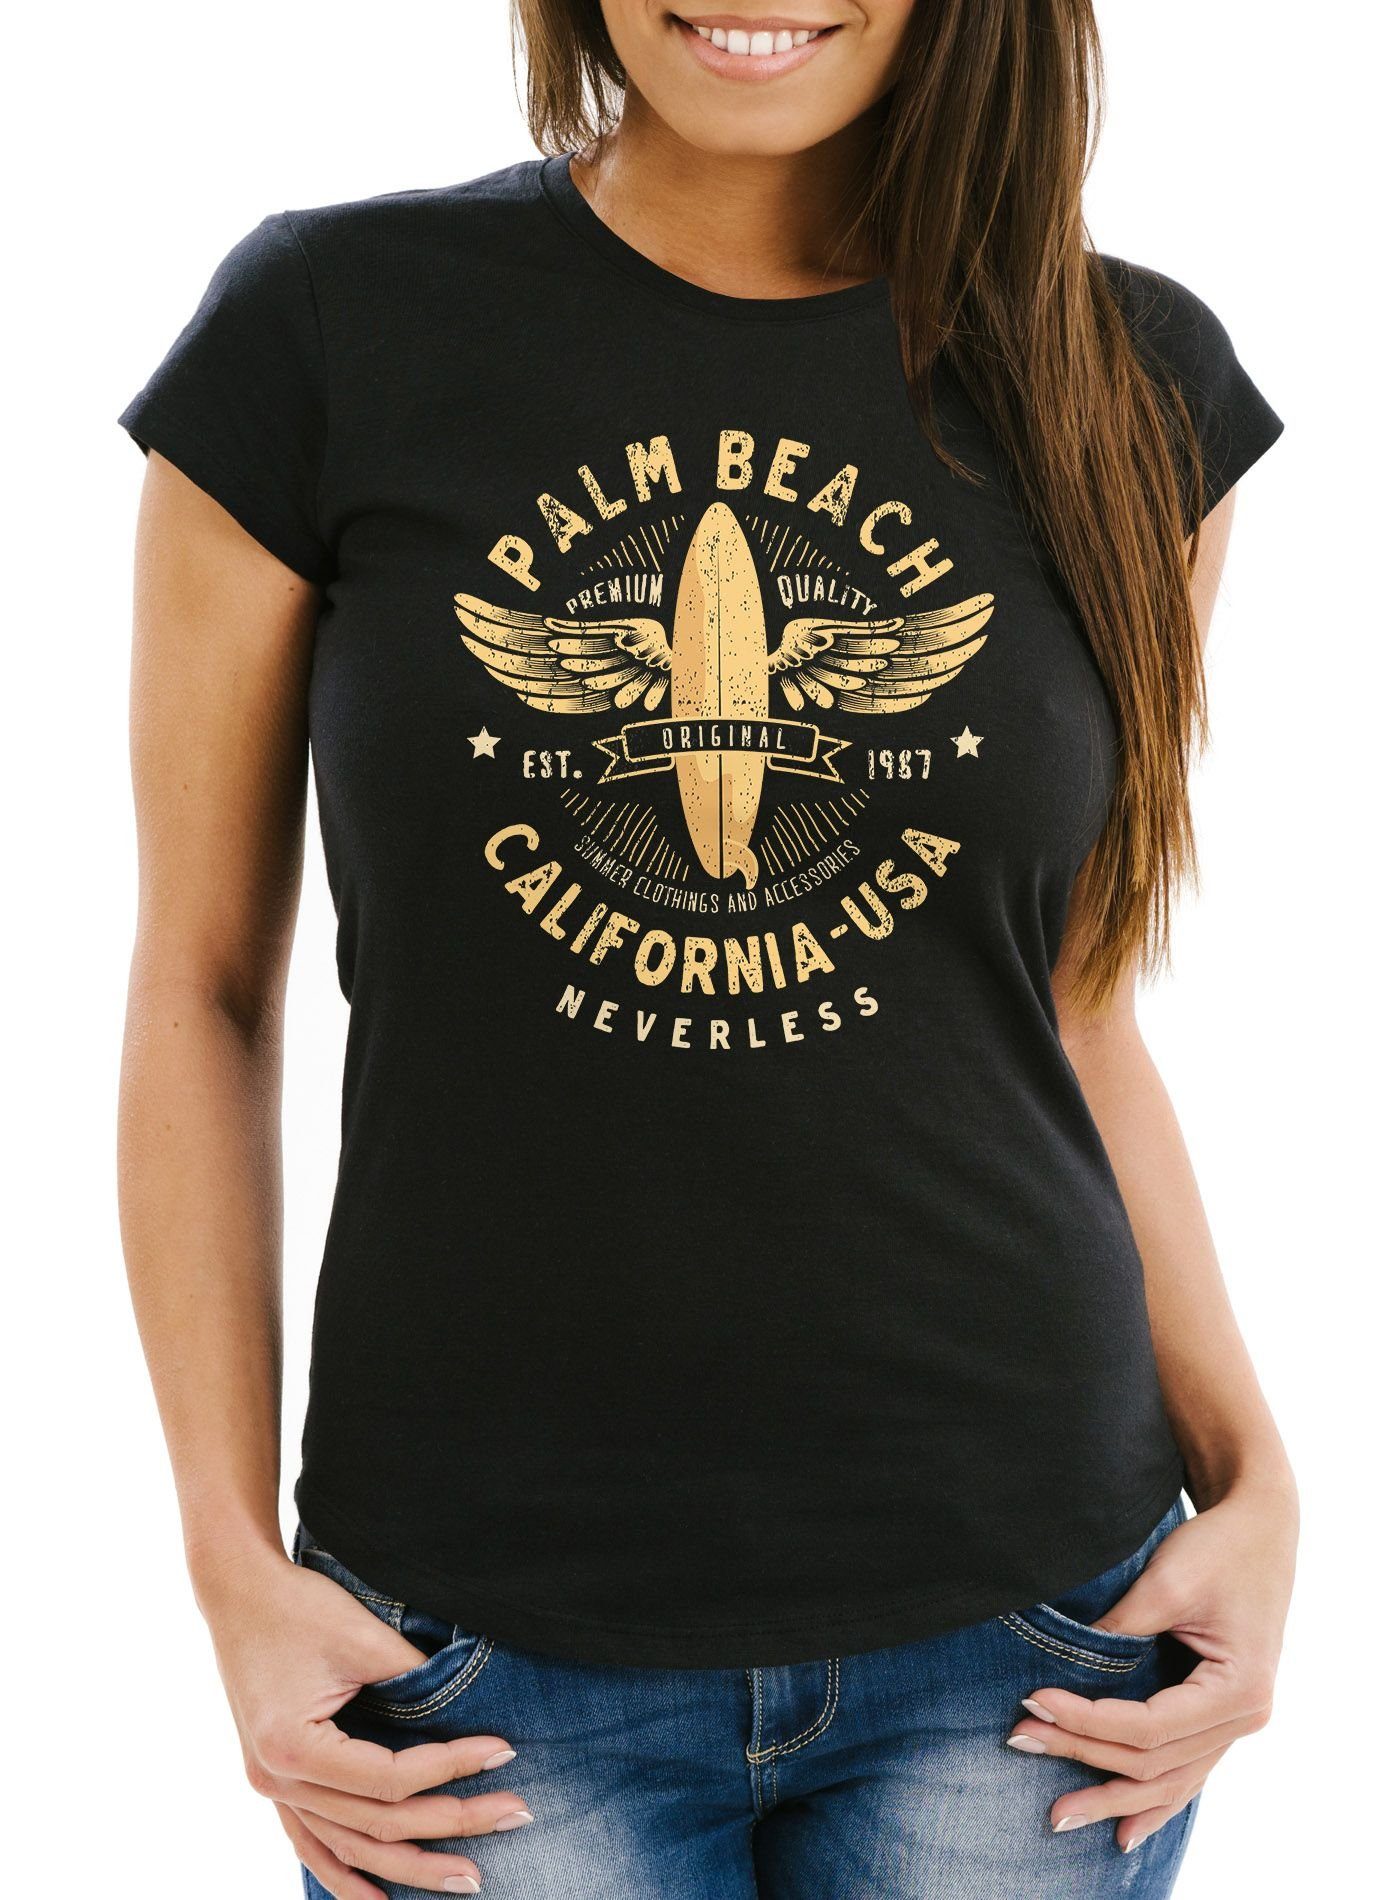 Neverless Print-Shirt »Damen T-Shirt Surfing Motiv Vintage Effekt Palm  Beach California USA Schriftzug Fashion Streetstyle Slim Fit Neverless®«  mit Print online kaufen | OTTO